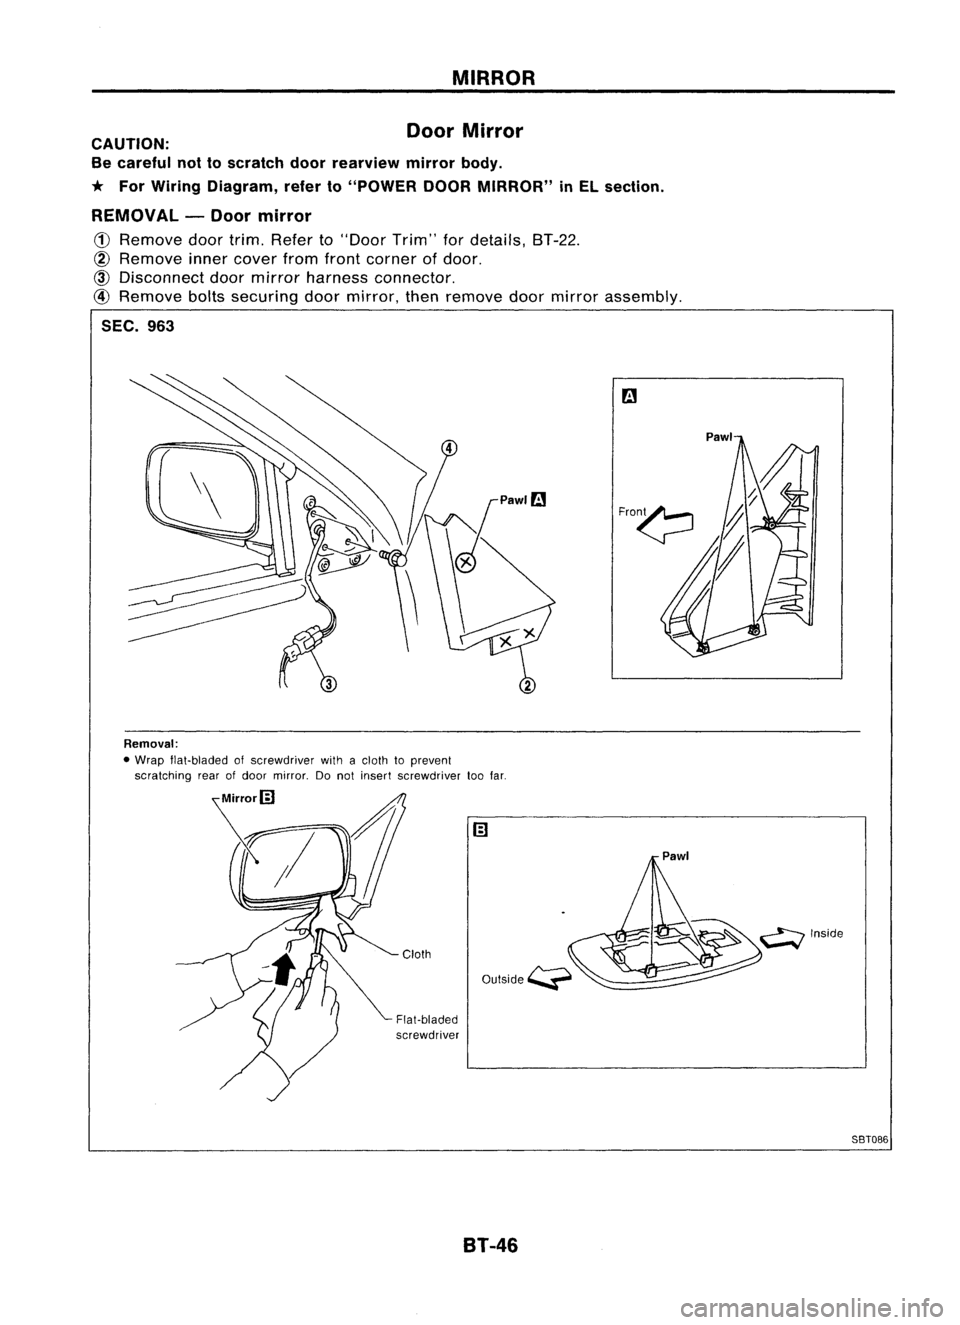 NISSAN ALMERA N15 1995  Service Manual DoorMirror

MIRROR

CAUTION:
Be careful nottoscratch doorrearview mirrorbody.
* For Wiring Diagram, referto"POWER DOORMIRROR" inEL section.
REMOVAL -Door mirror

CD 
Remove doortrim. Refer to&